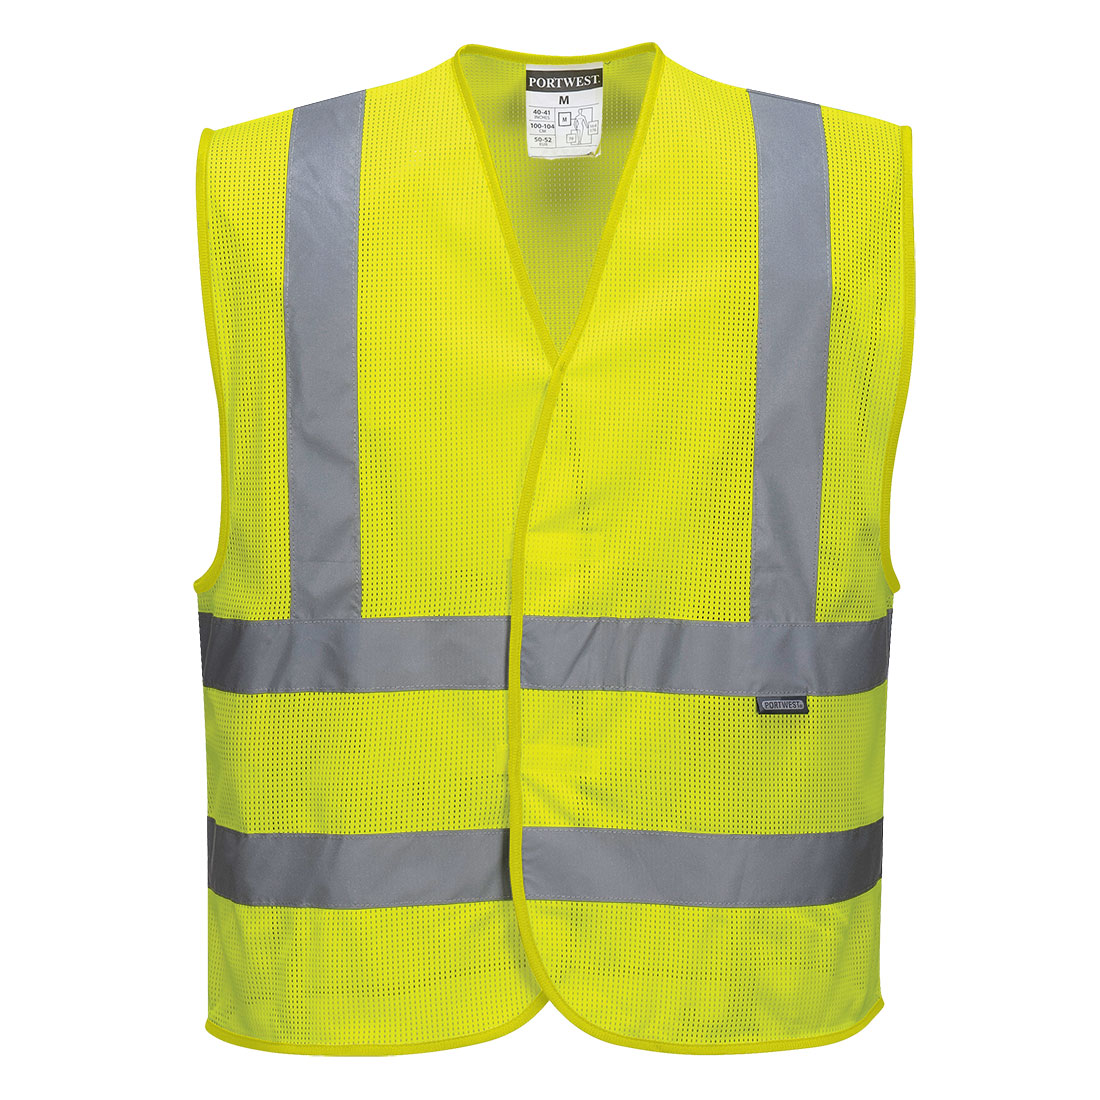 MeshAir Band & Brace Vest Size L/XL Yellow